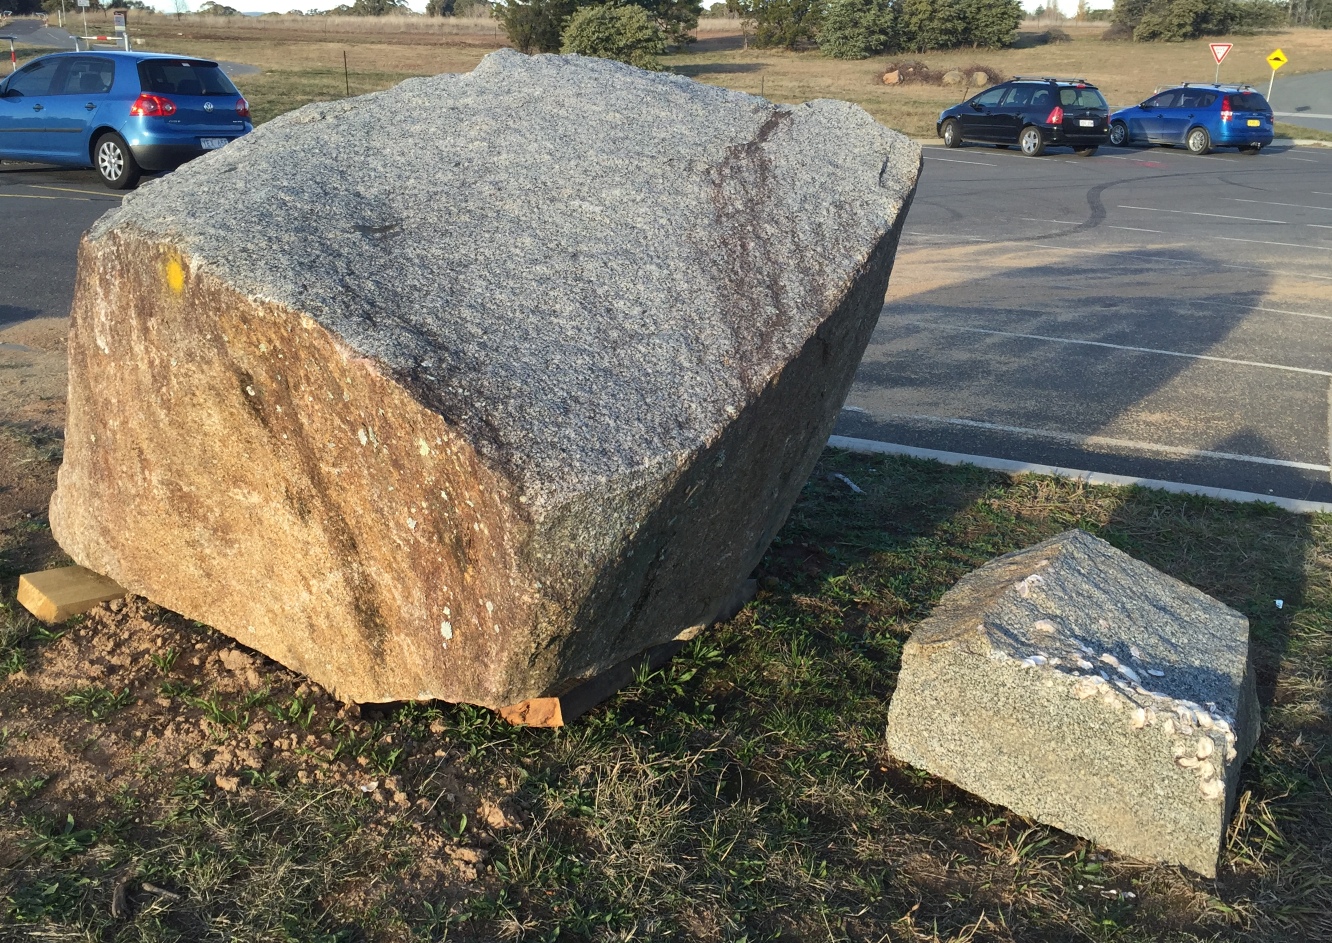 Moruya granite arrives in Canberra!